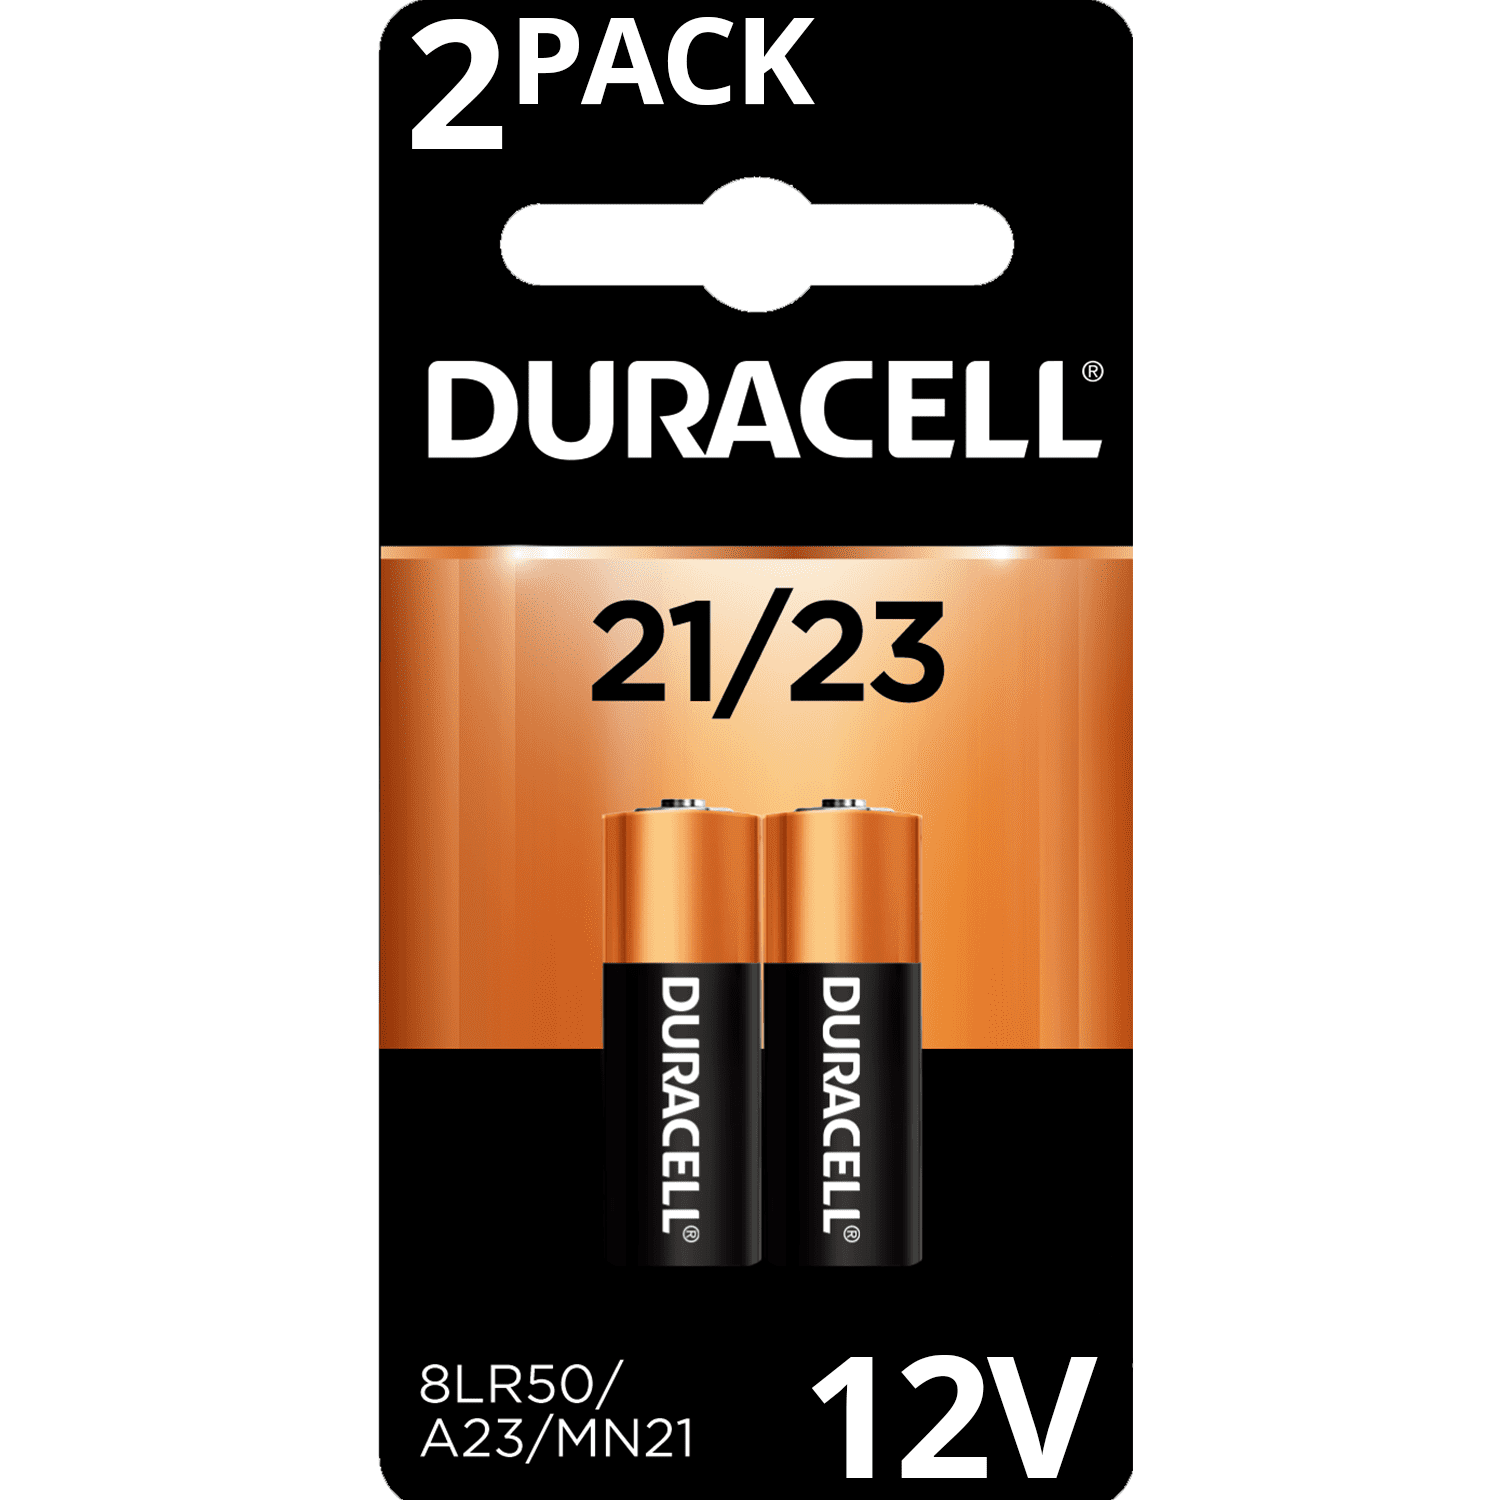 Duracell Batteries, Alkaline, 21/23, 12V, 2 Pack - 2 batteries